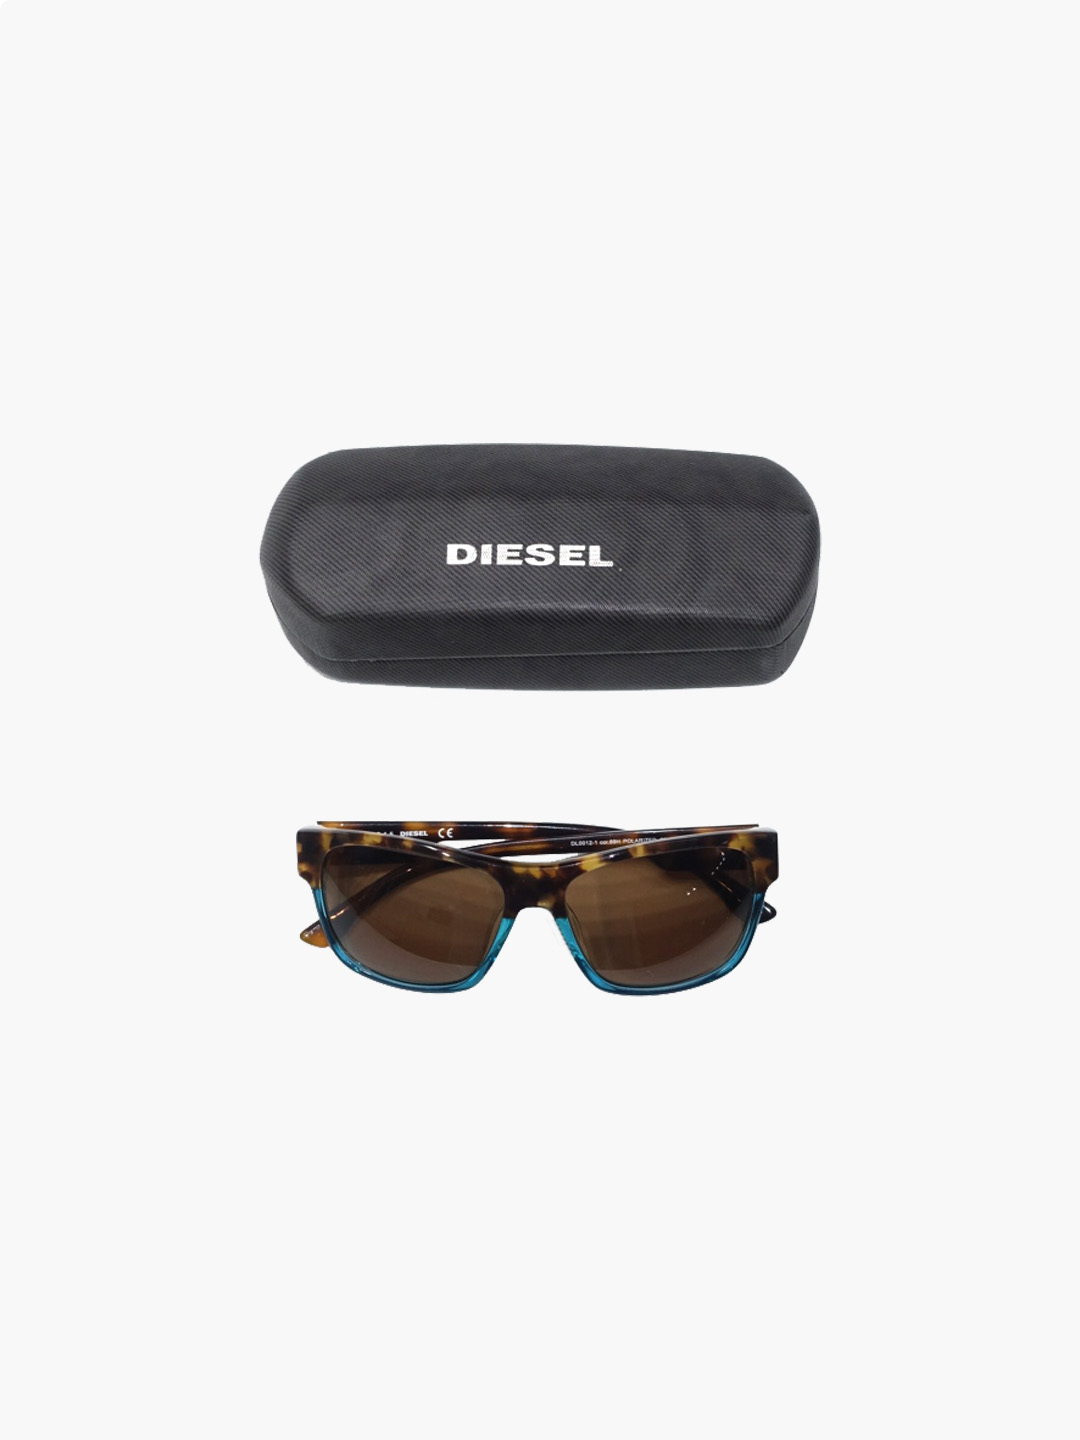 DIESELLeopard mix sunglasses